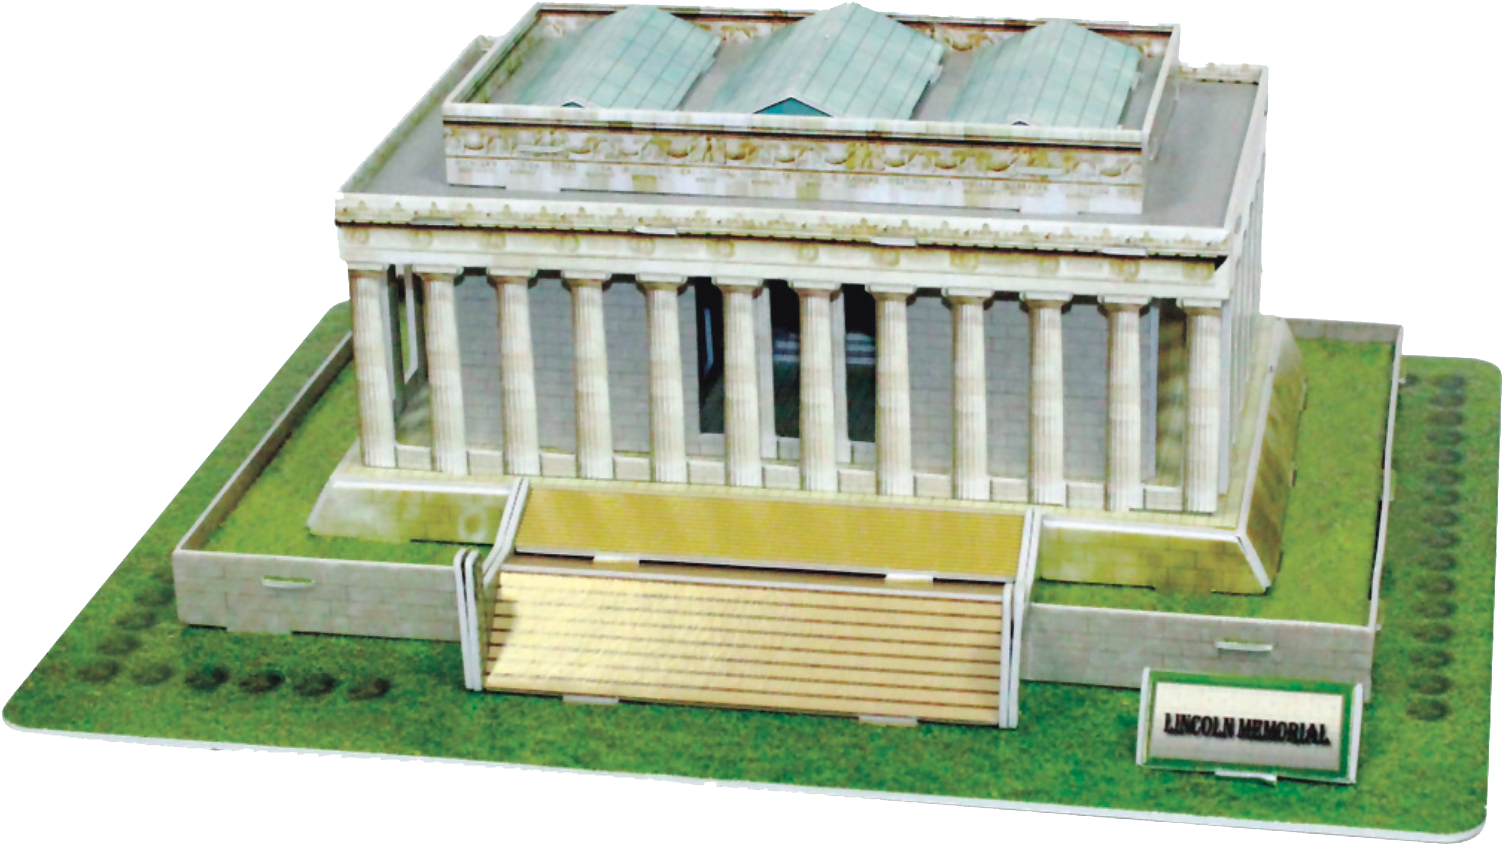 Lincoln Memorial Model